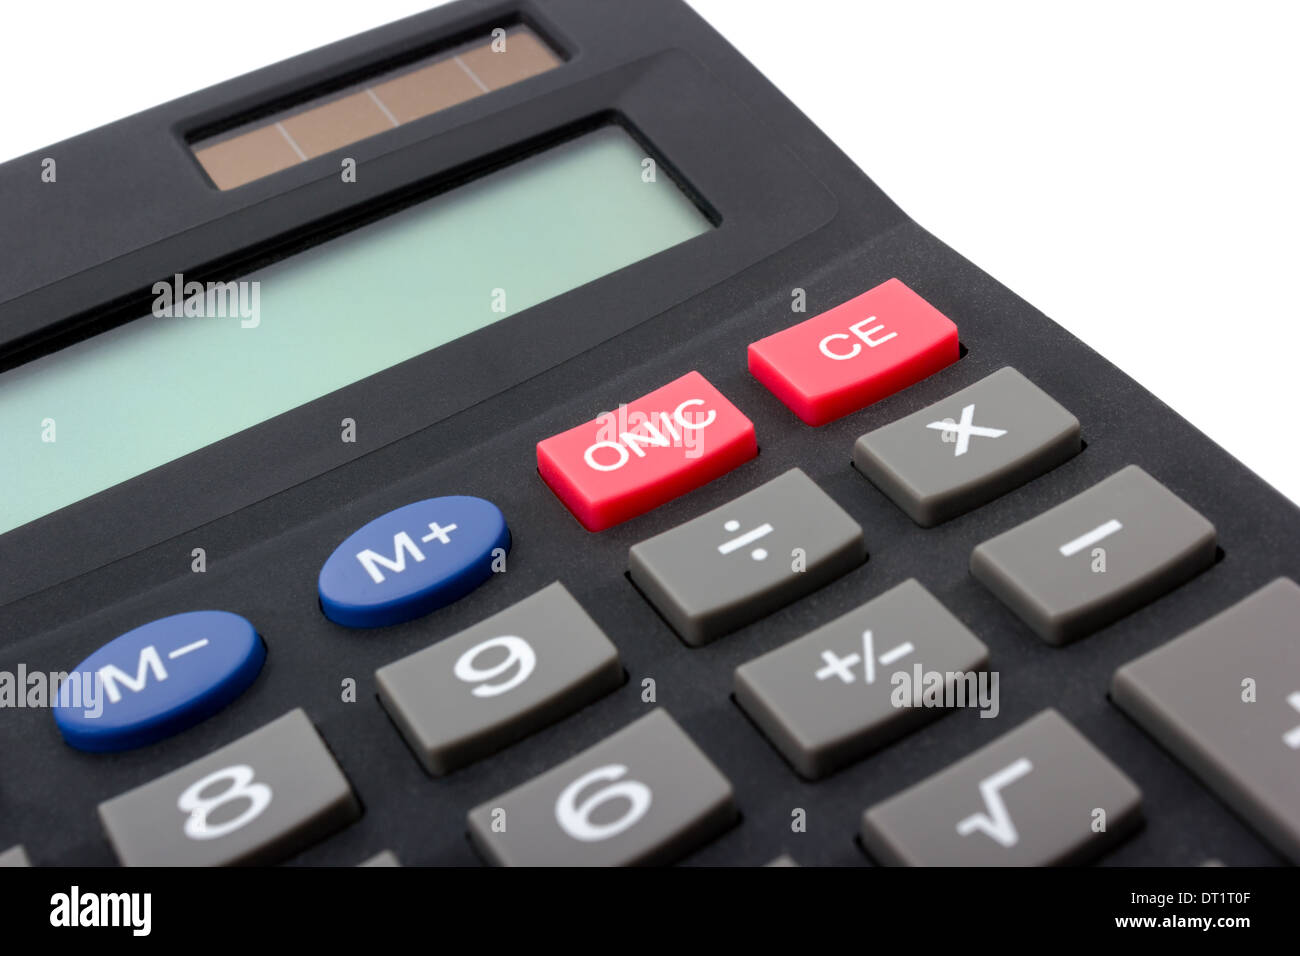 Digital electronic calculator isolated on white background Stock Photo